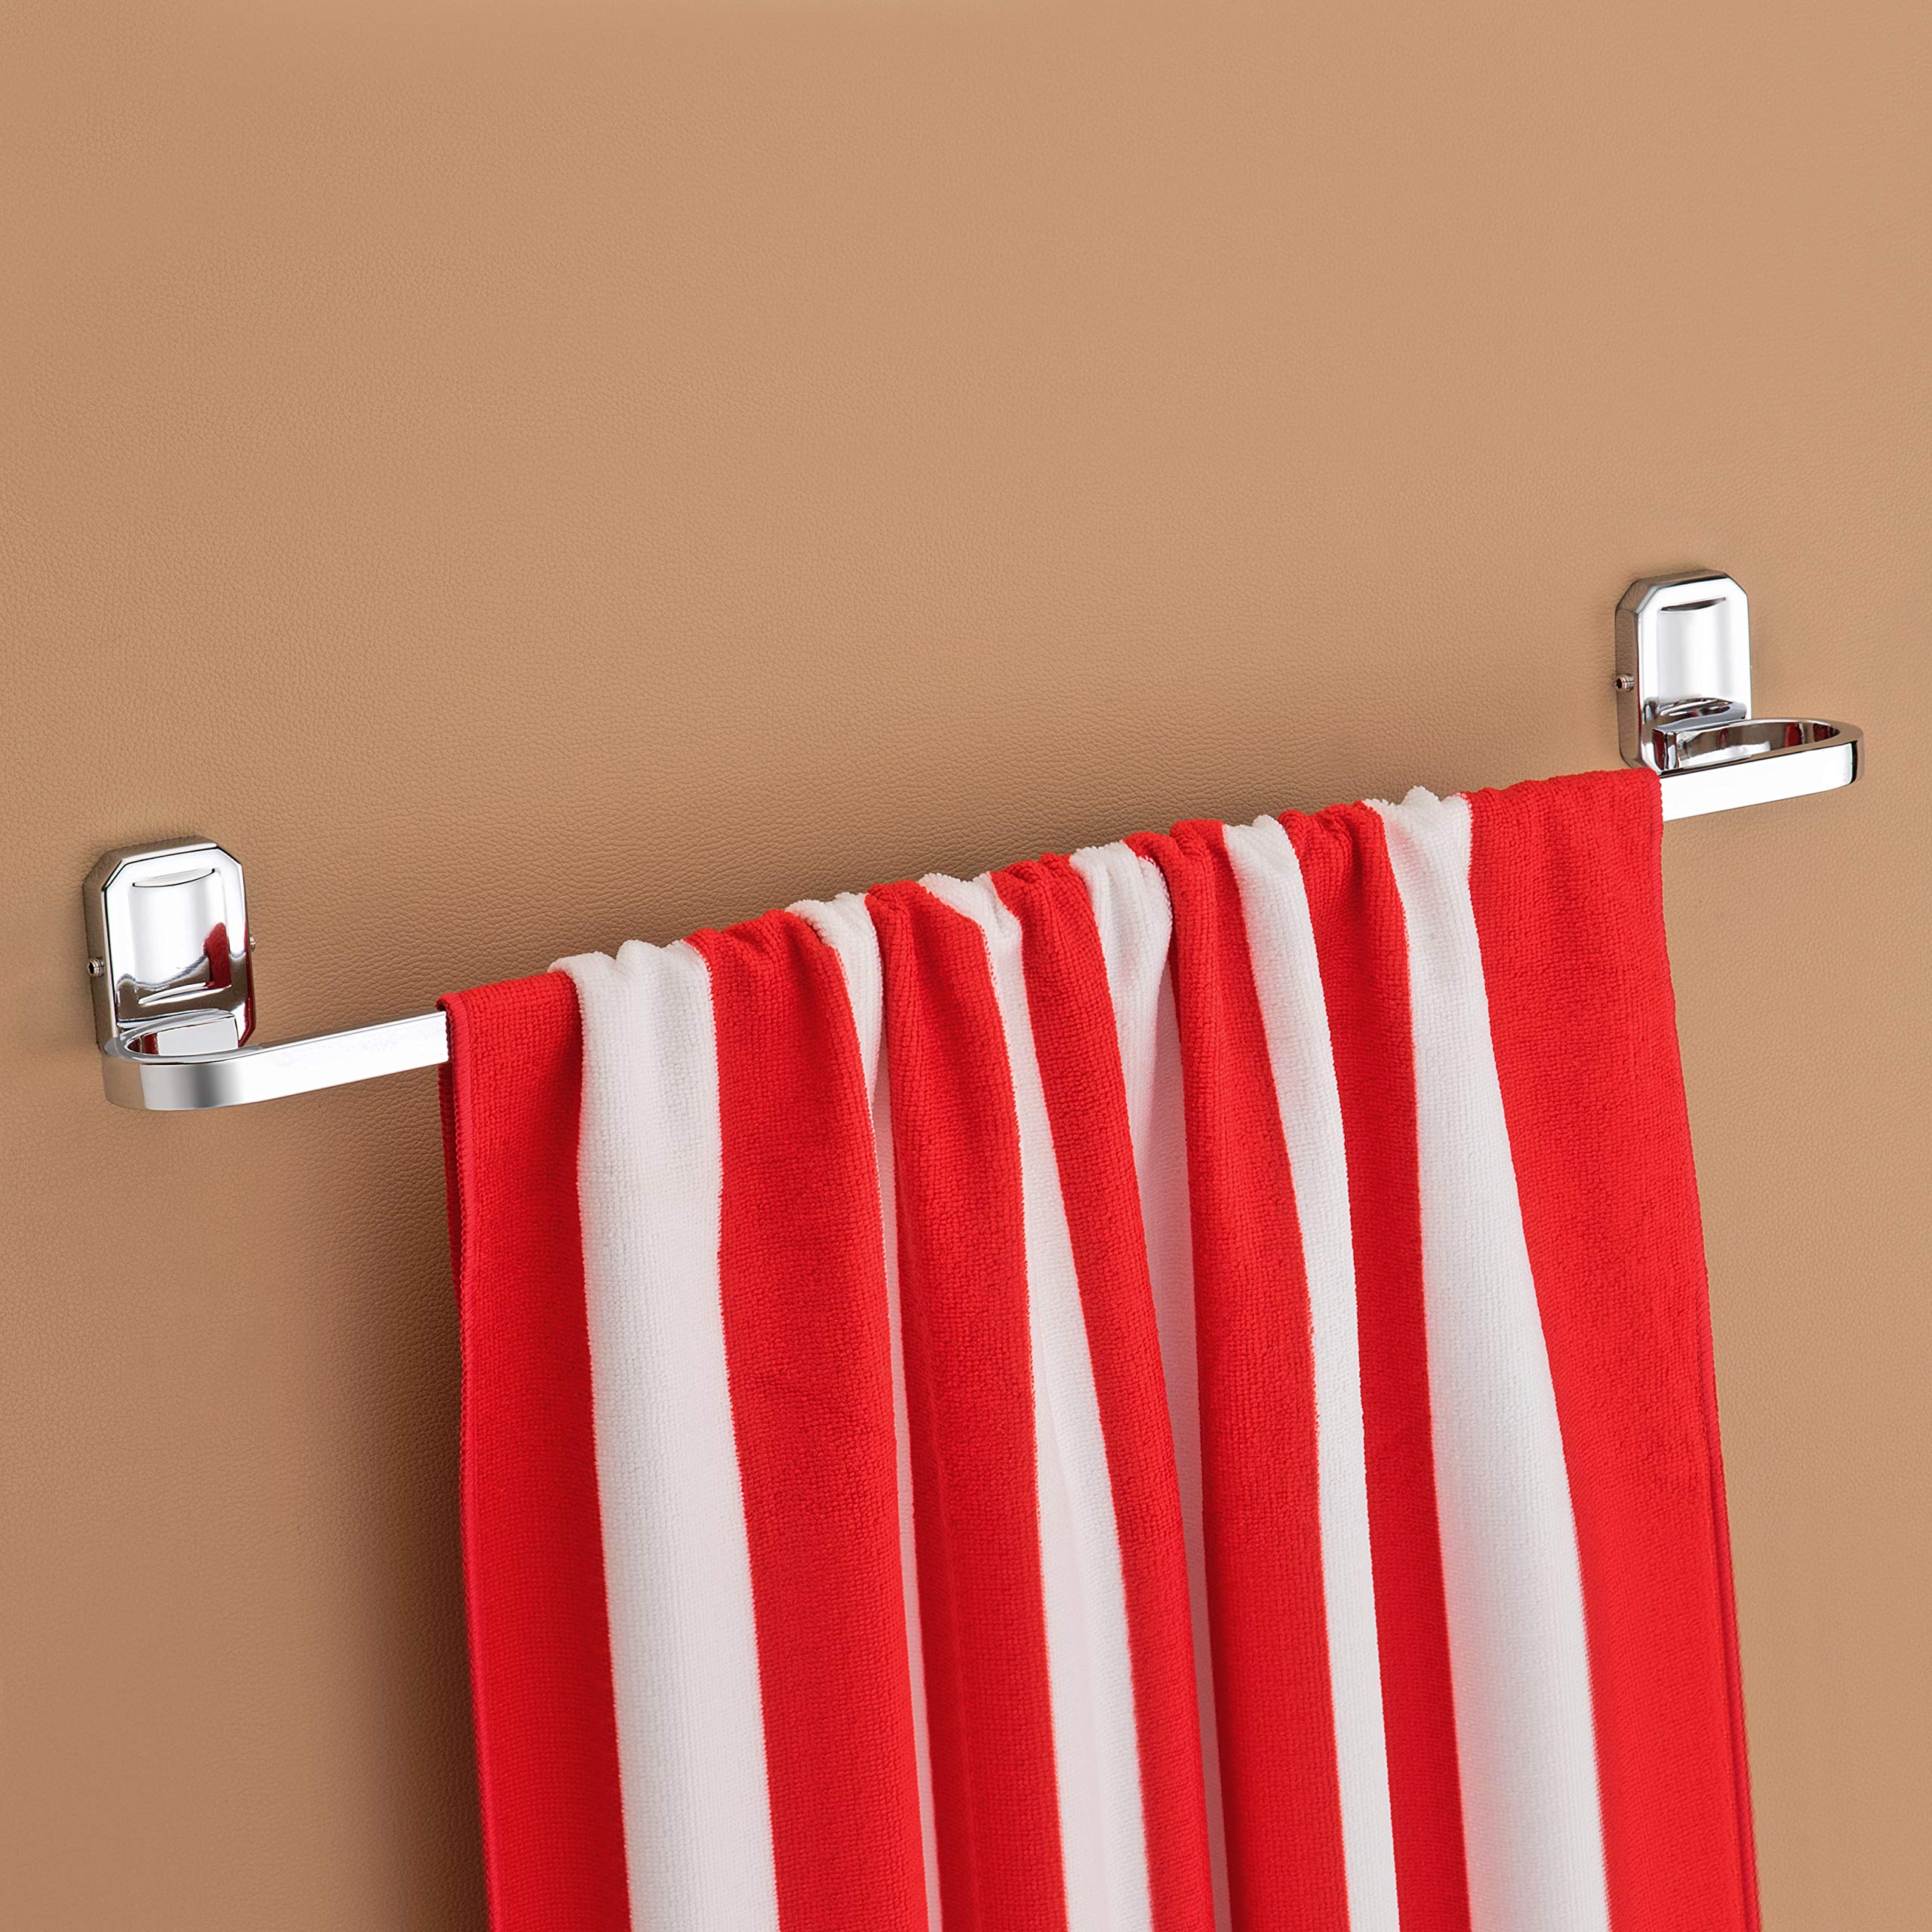 Plantex Stainless Steel 304 Grade Bathroom Accessories Set/Bathroom Hanger for Towel/Towel Bar/Napkin Ring/Tumbler Holder/Soap Dish/Robe Hook (Cute - Pack of 5)